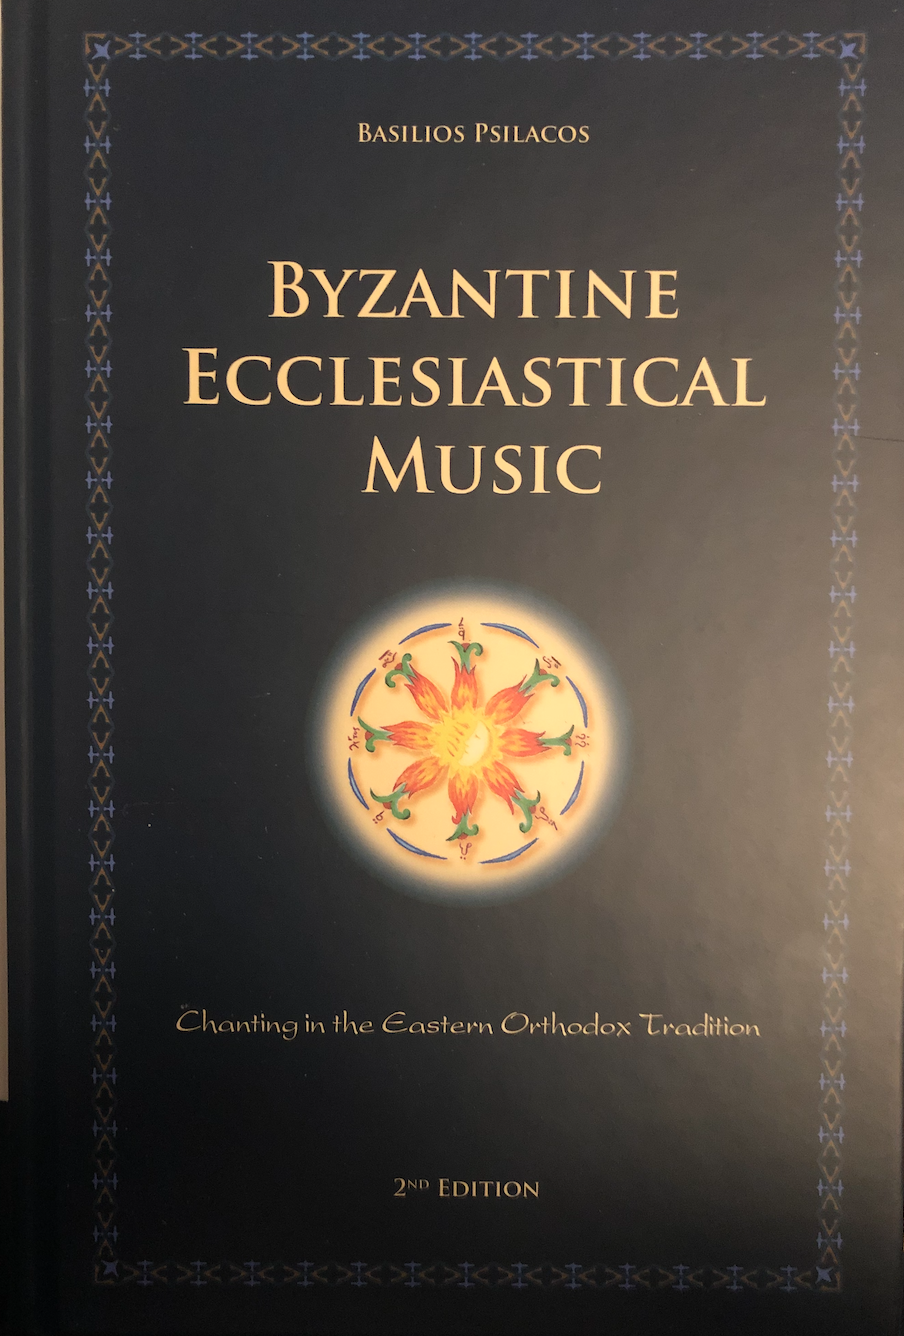 Book: Byzantine Ecclesiastical Music